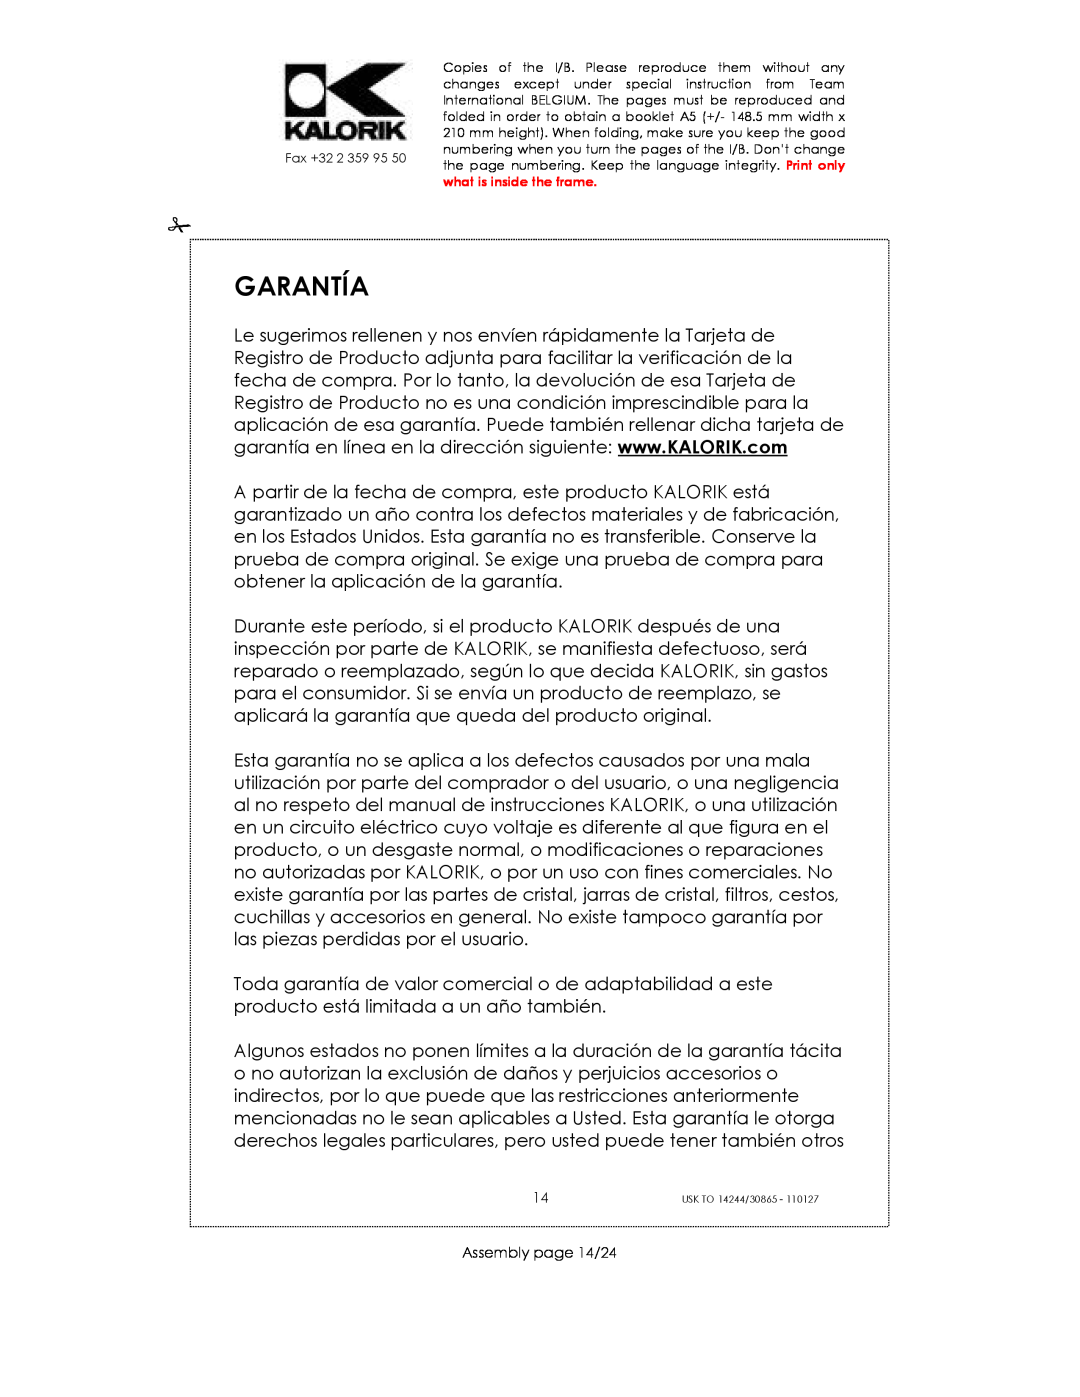 Kalorik 35481, 30865, 14244 manual Garantía, Assembly page 14/24 